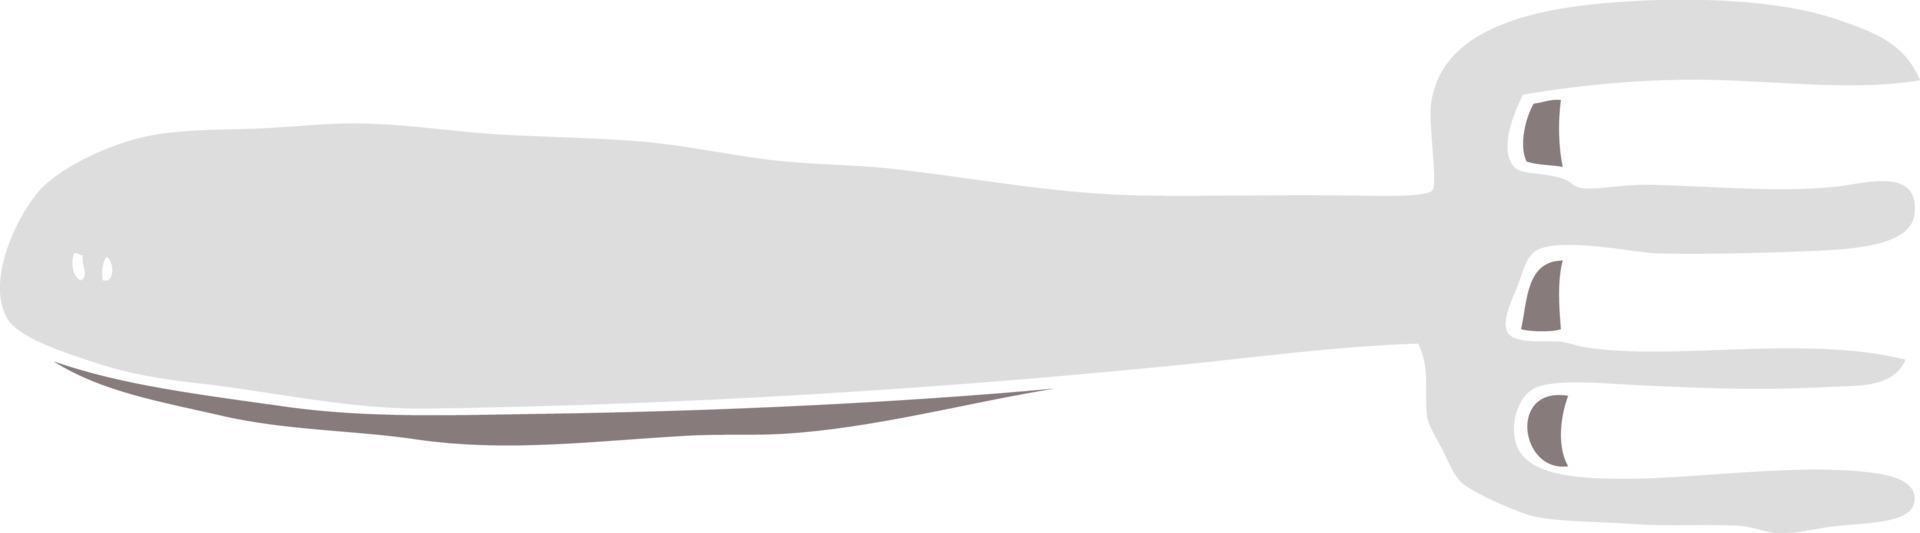 flat color style cartoon fork vector